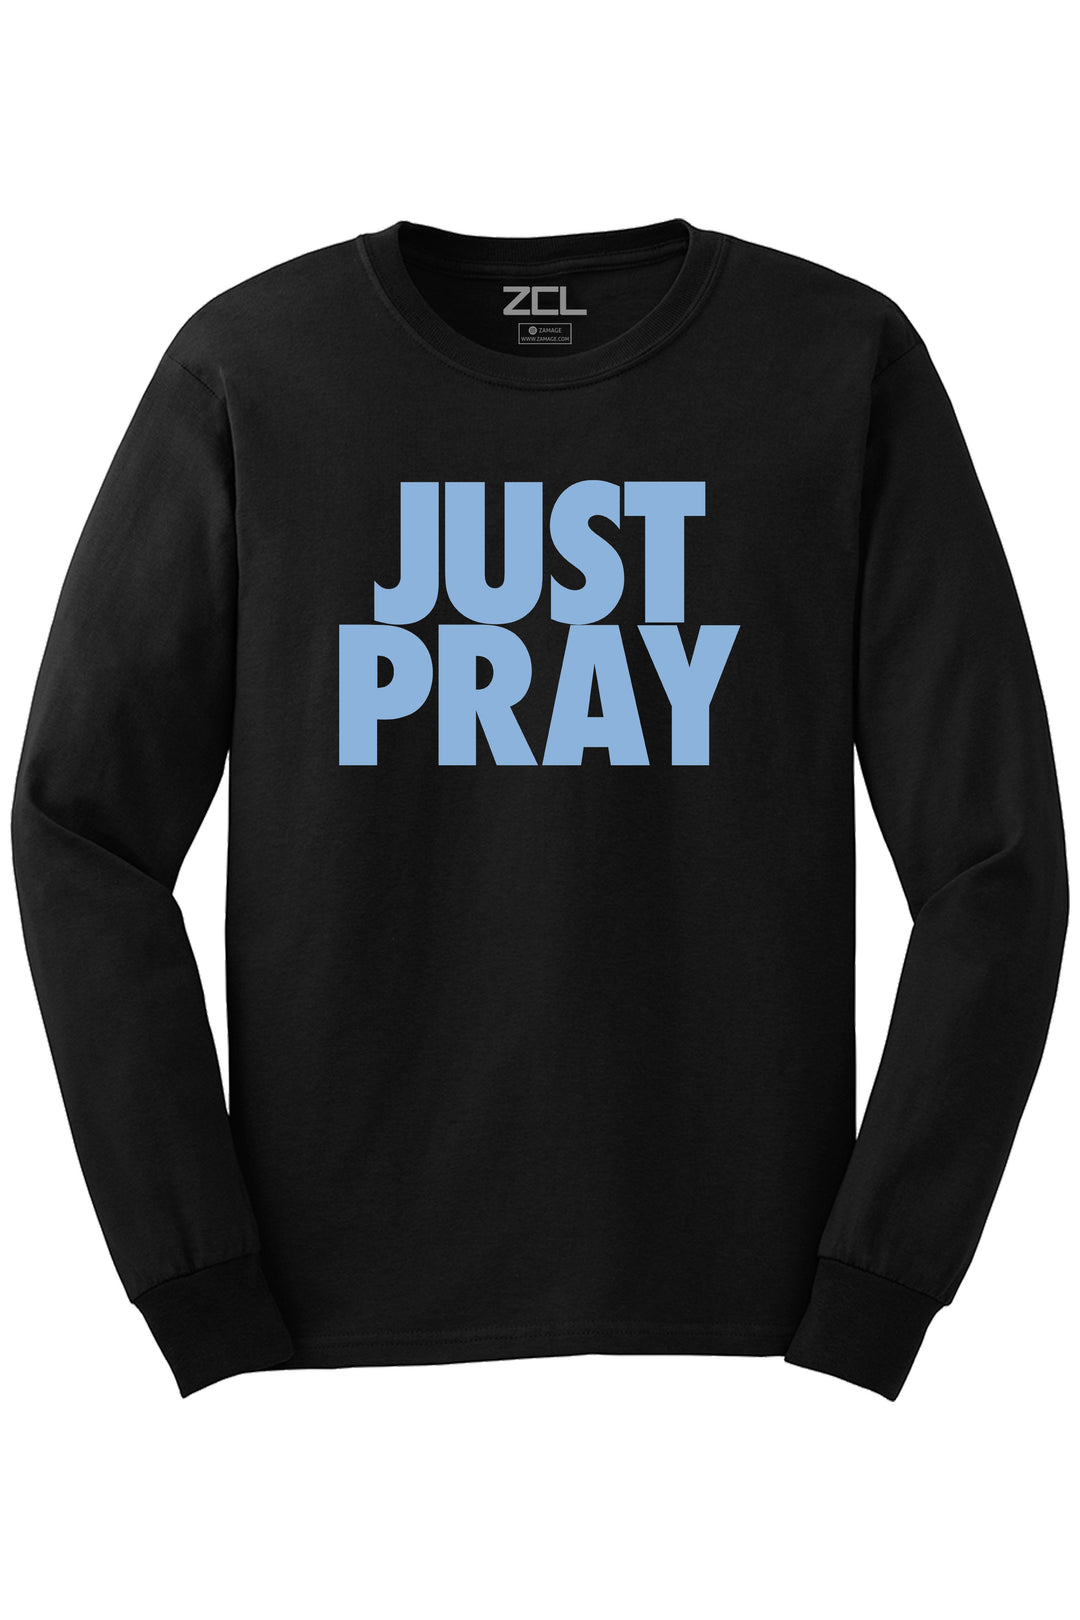 Just Pray Long Sleeve Tee (Powder Blue Logo) - Zamage